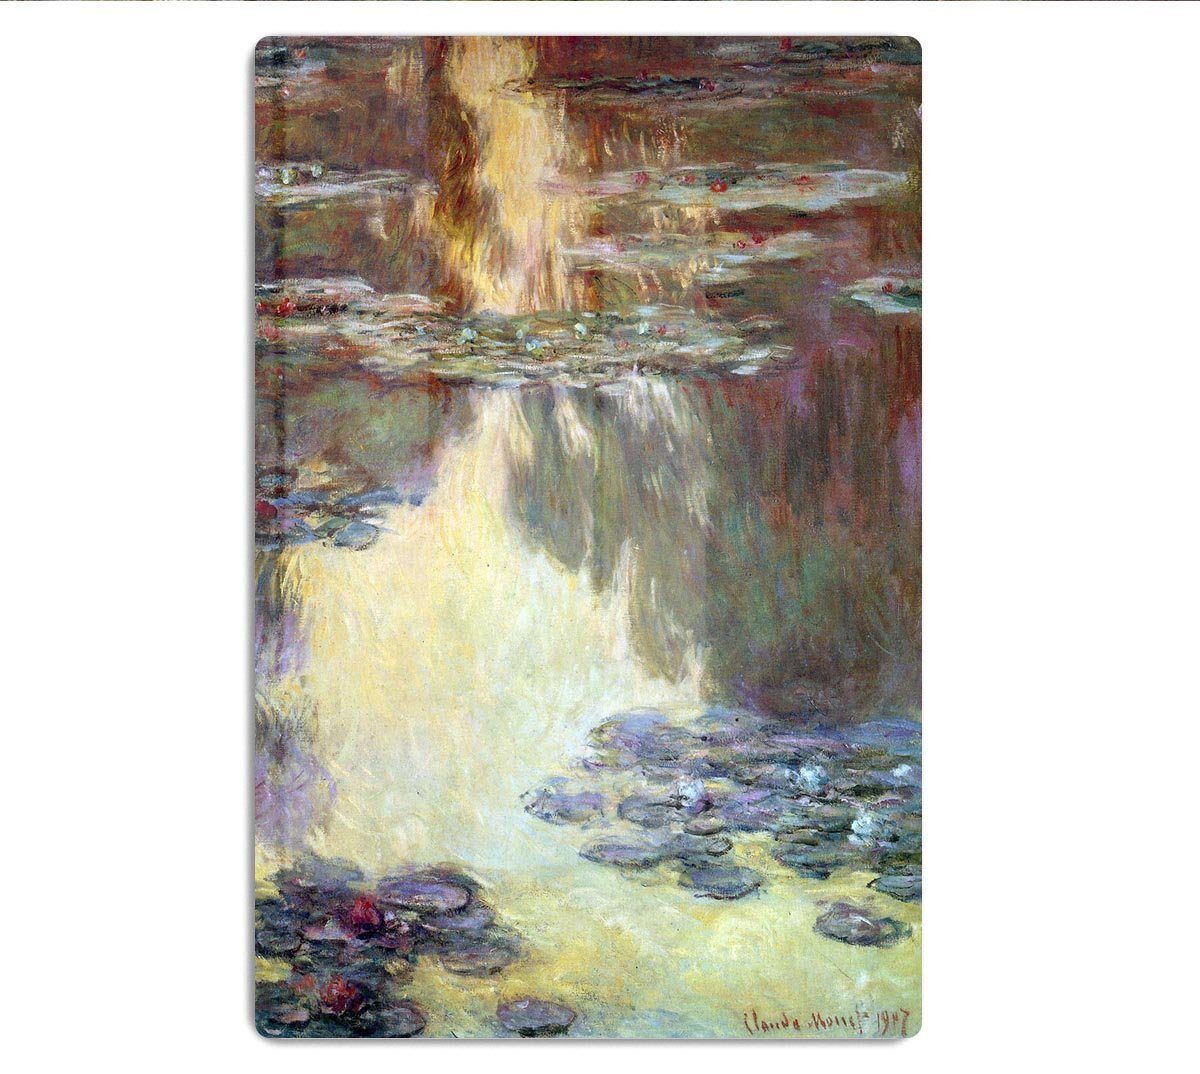 Water lilies water landscape 6 by Monet HD Metal Print